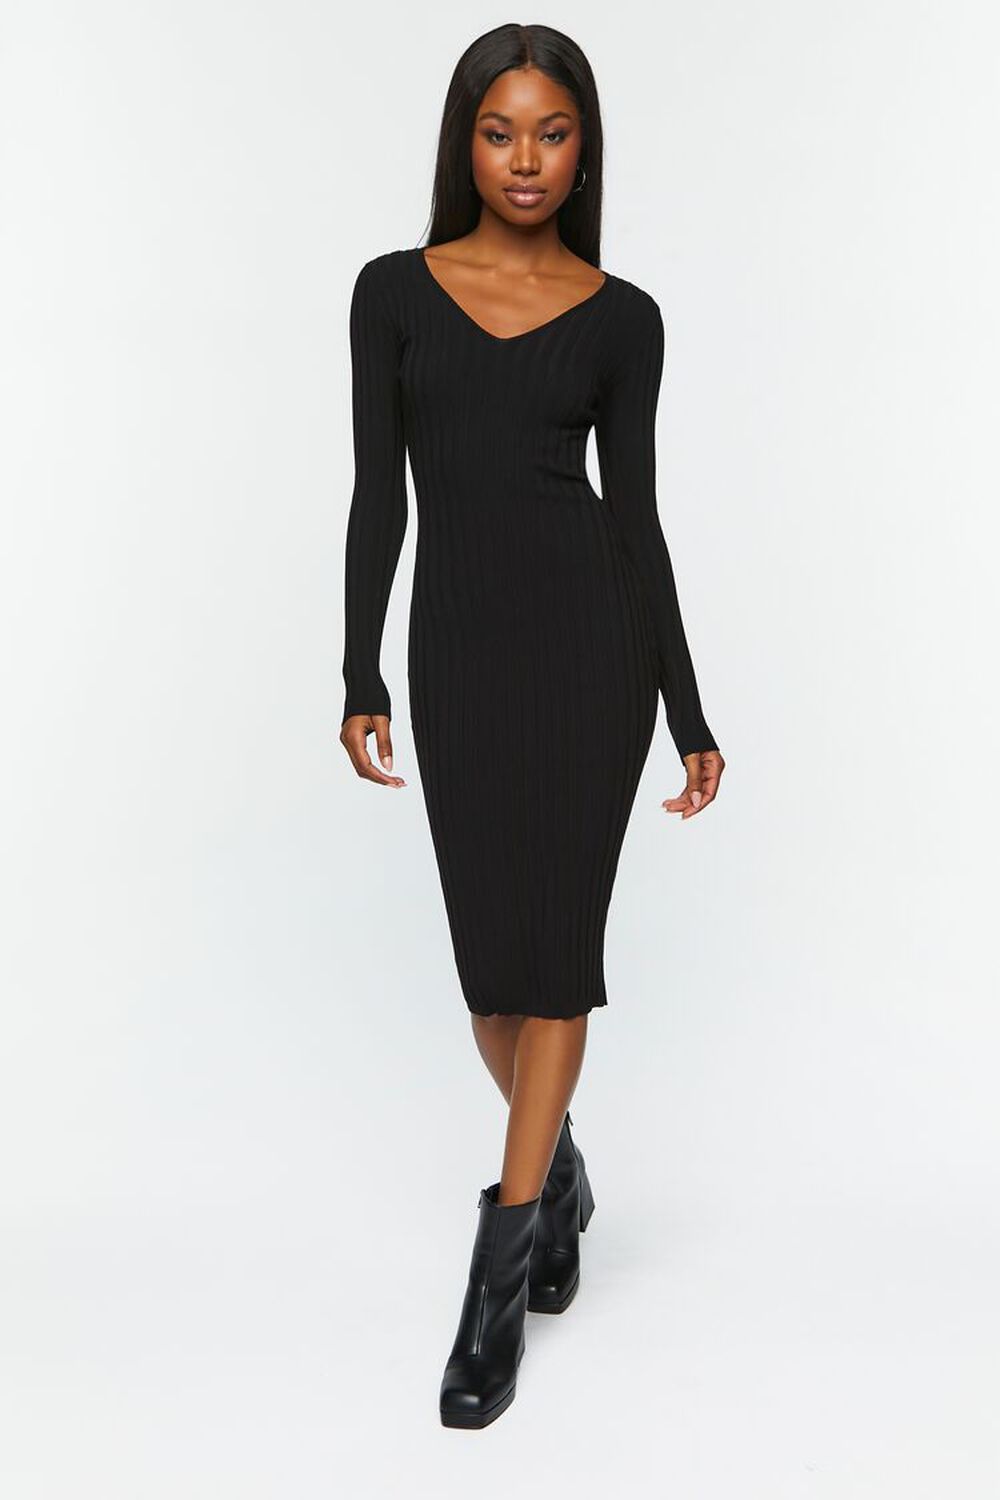 BLACK Sweater-Knit V-Neck Midi Dress, image 1